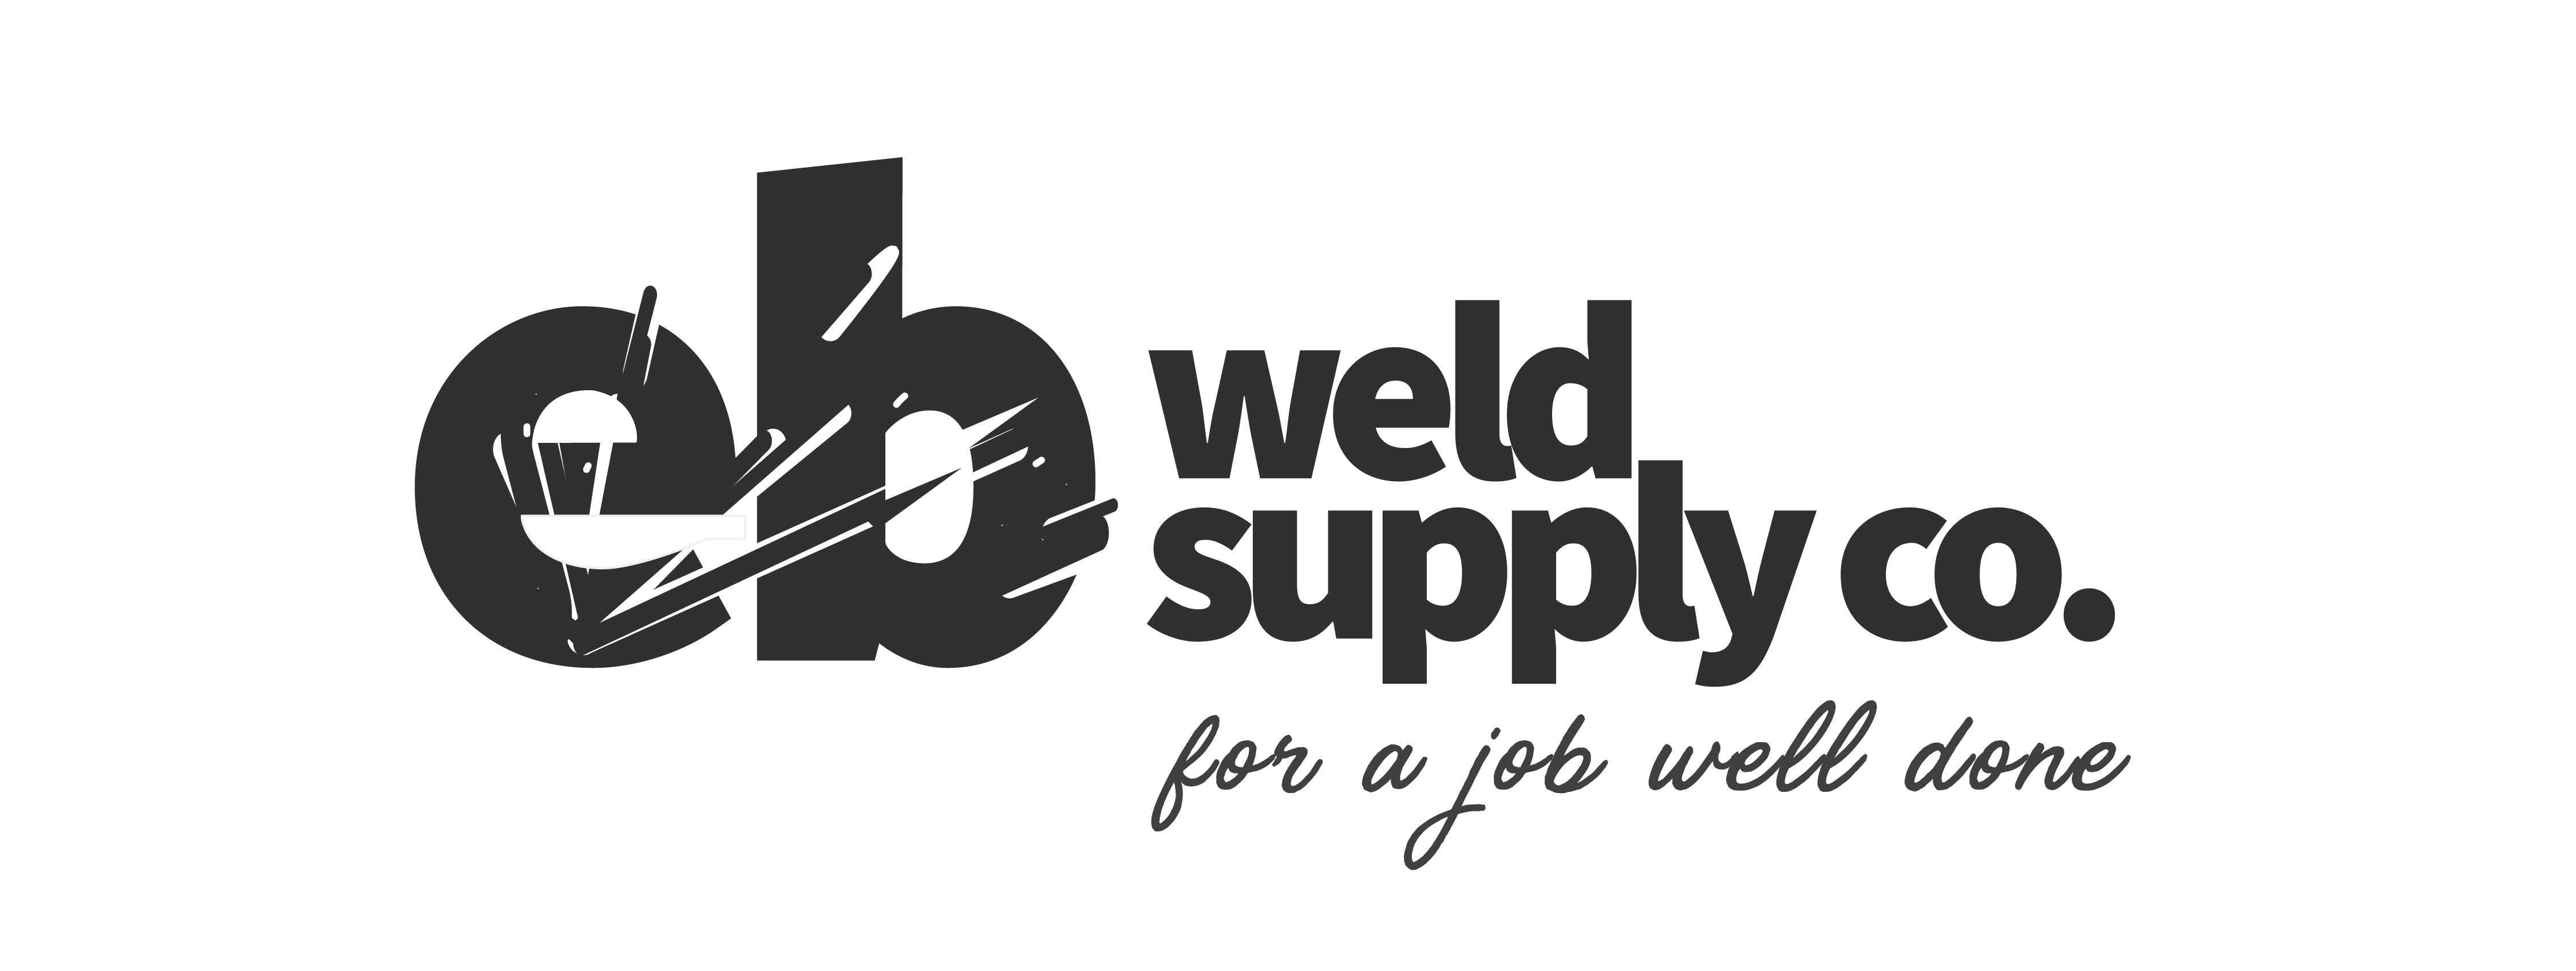 graphic web design eb weld supply